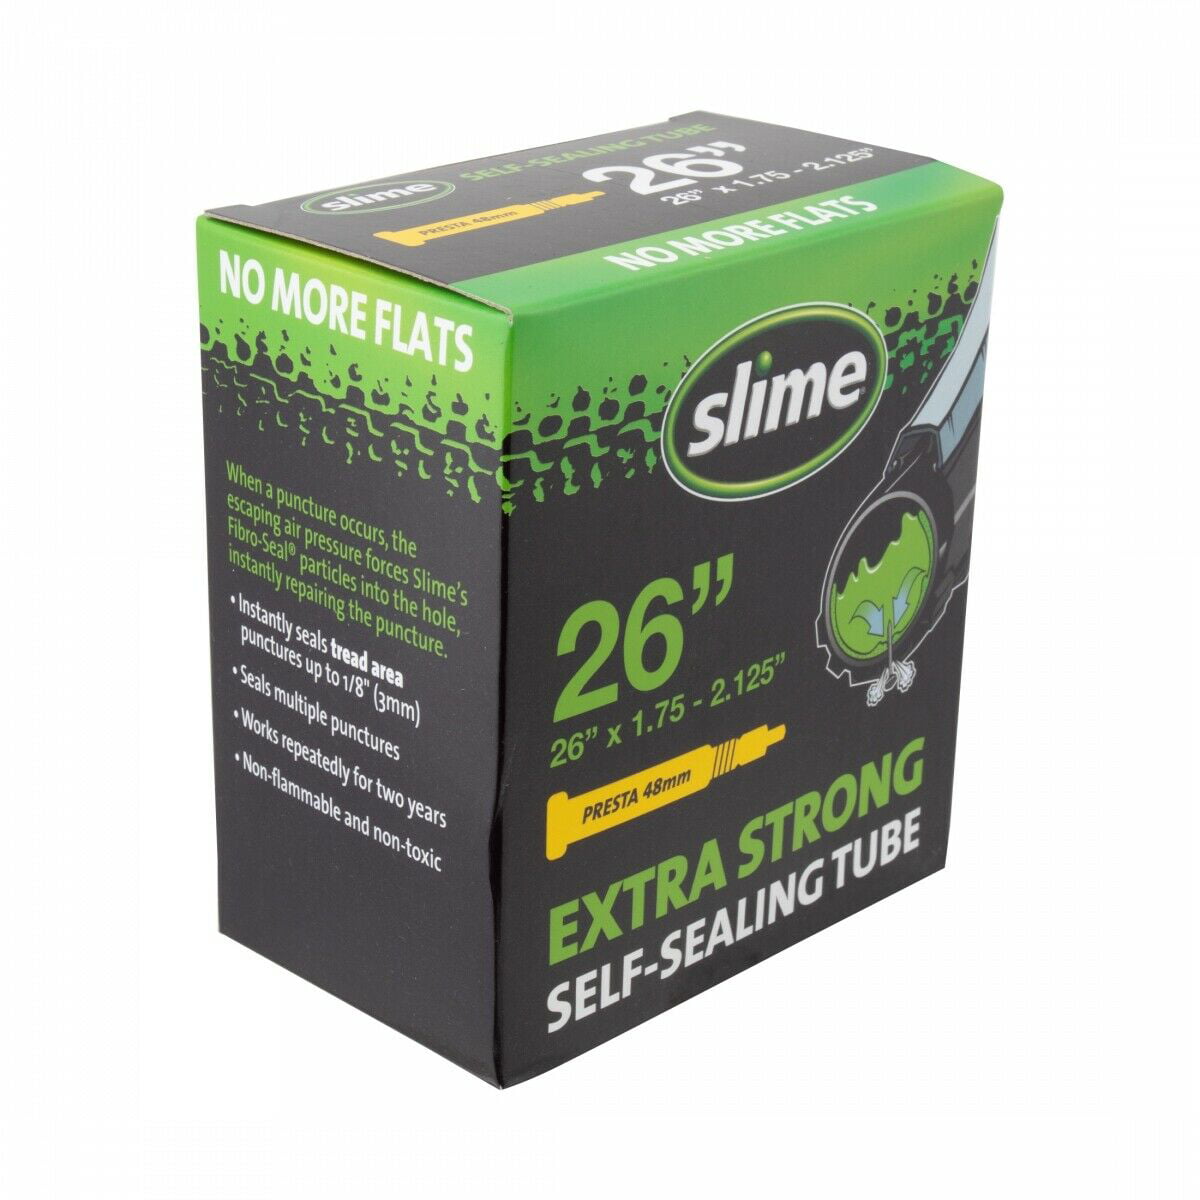 Slime Self Sealing 26 X 1.75 2.125 48mm Presta Valve Bicycle Tube for sale online 